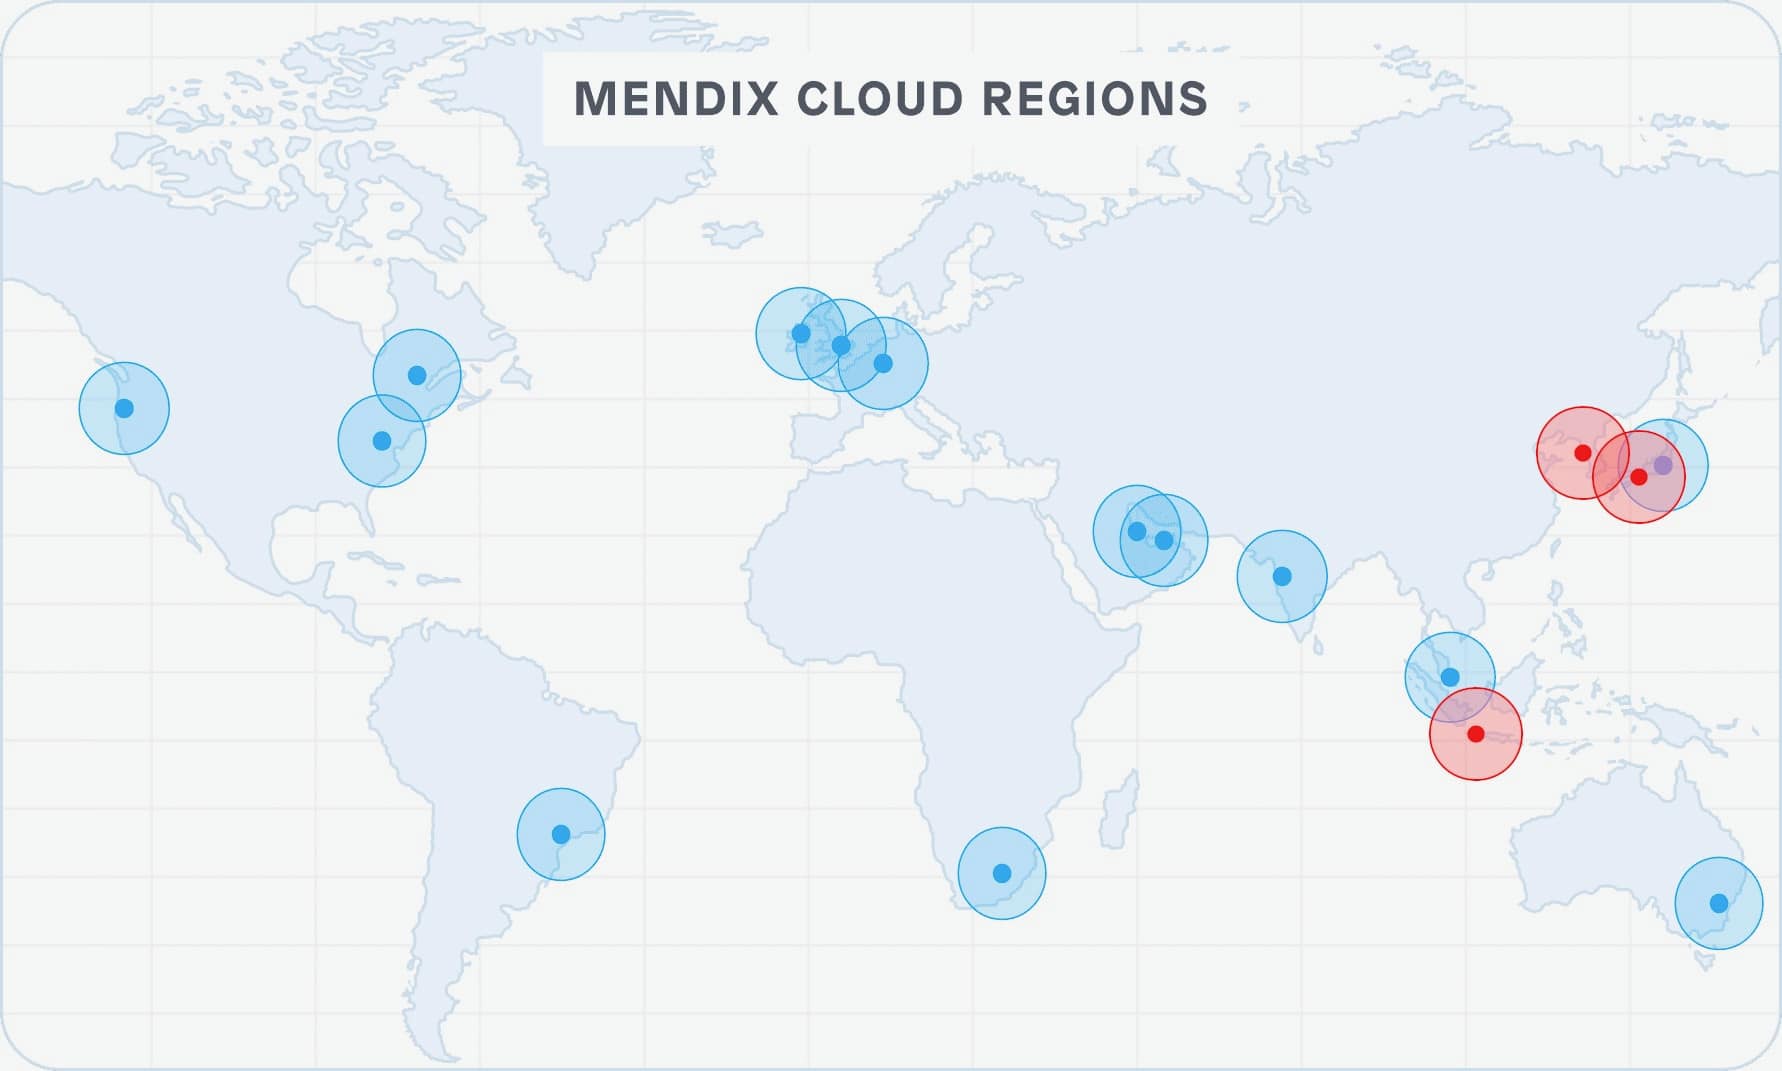 Mendix Cloud expansion into Seoul Korea, Jakarta Indonesia, and Osaka Japan.